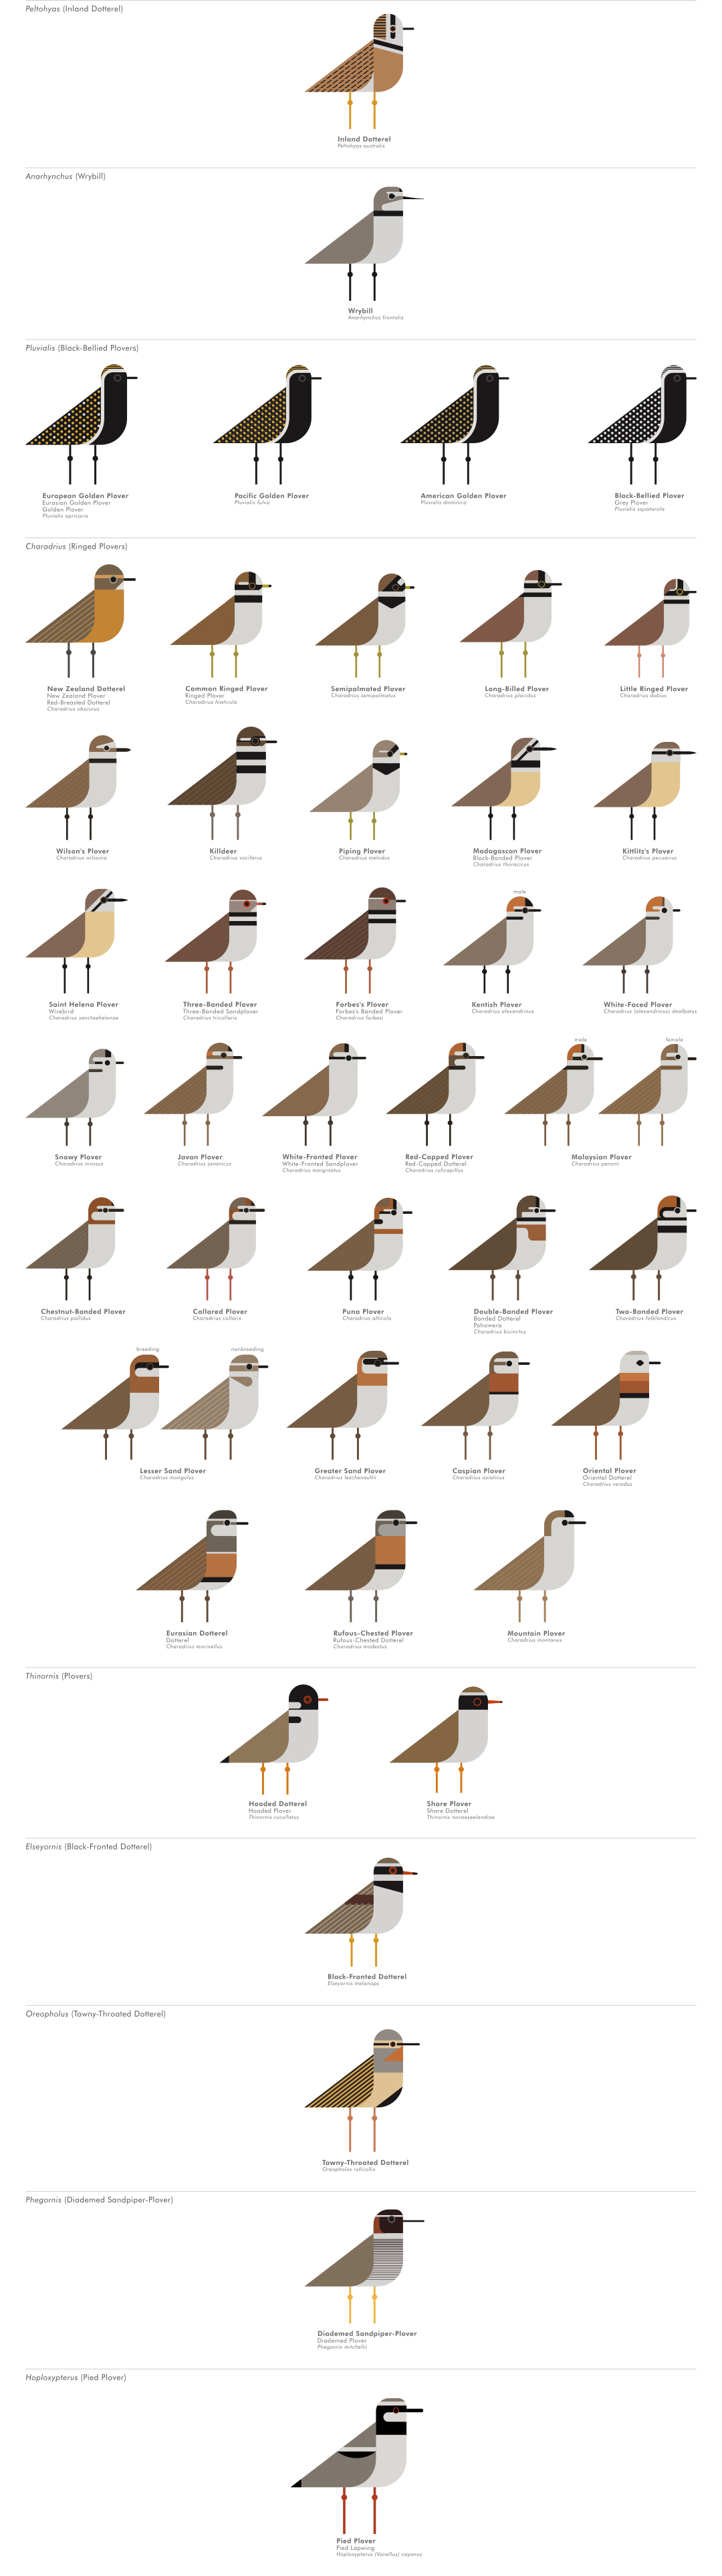 scott partridge - ave - avian vector encyclopedia - shorebirds plovers - vector bird art